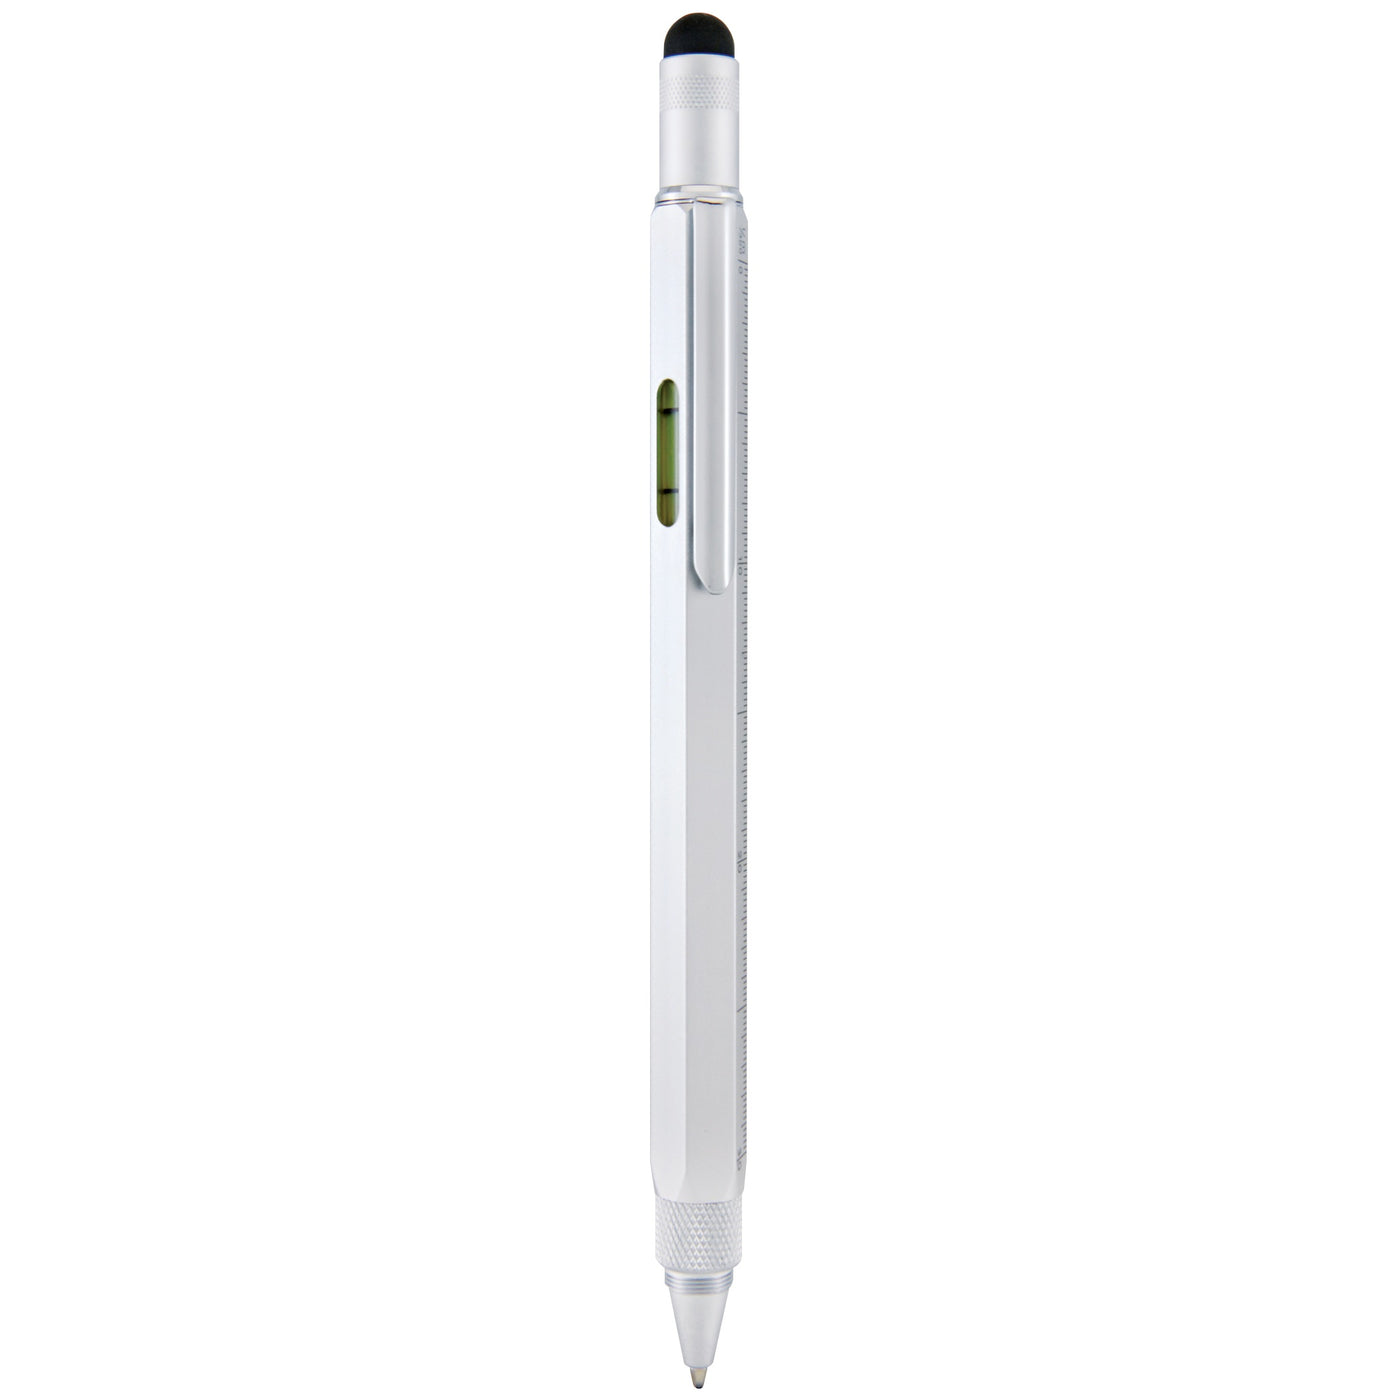 Monteverde One Touch Stylus Tool Silver Ballpoint Pen